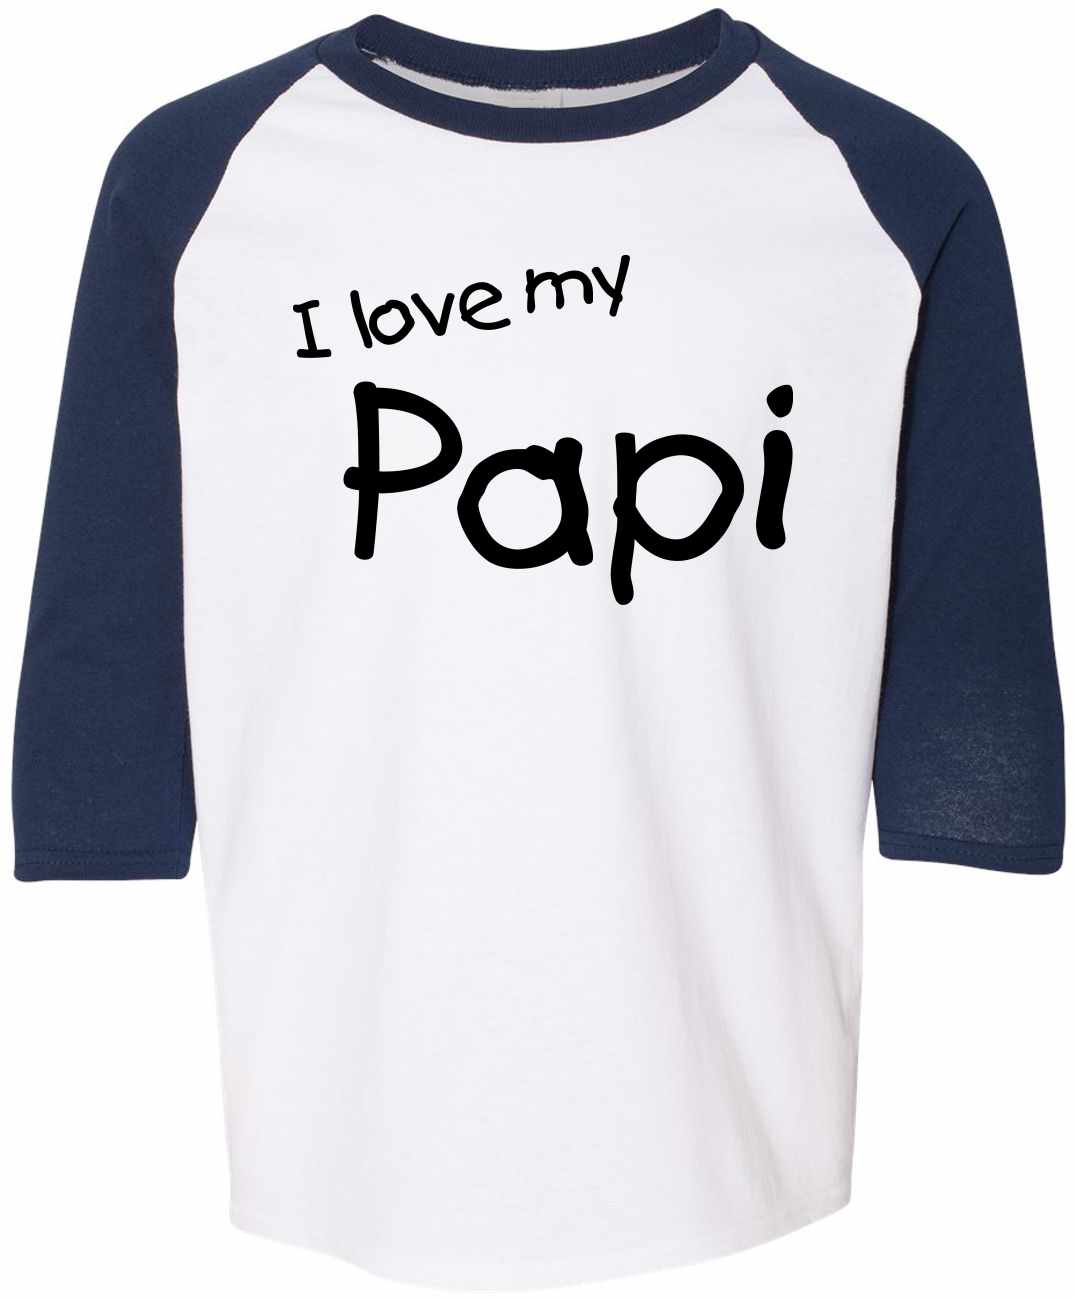 I Love My Papi on Youth Baseball Shirt (#1126-212)